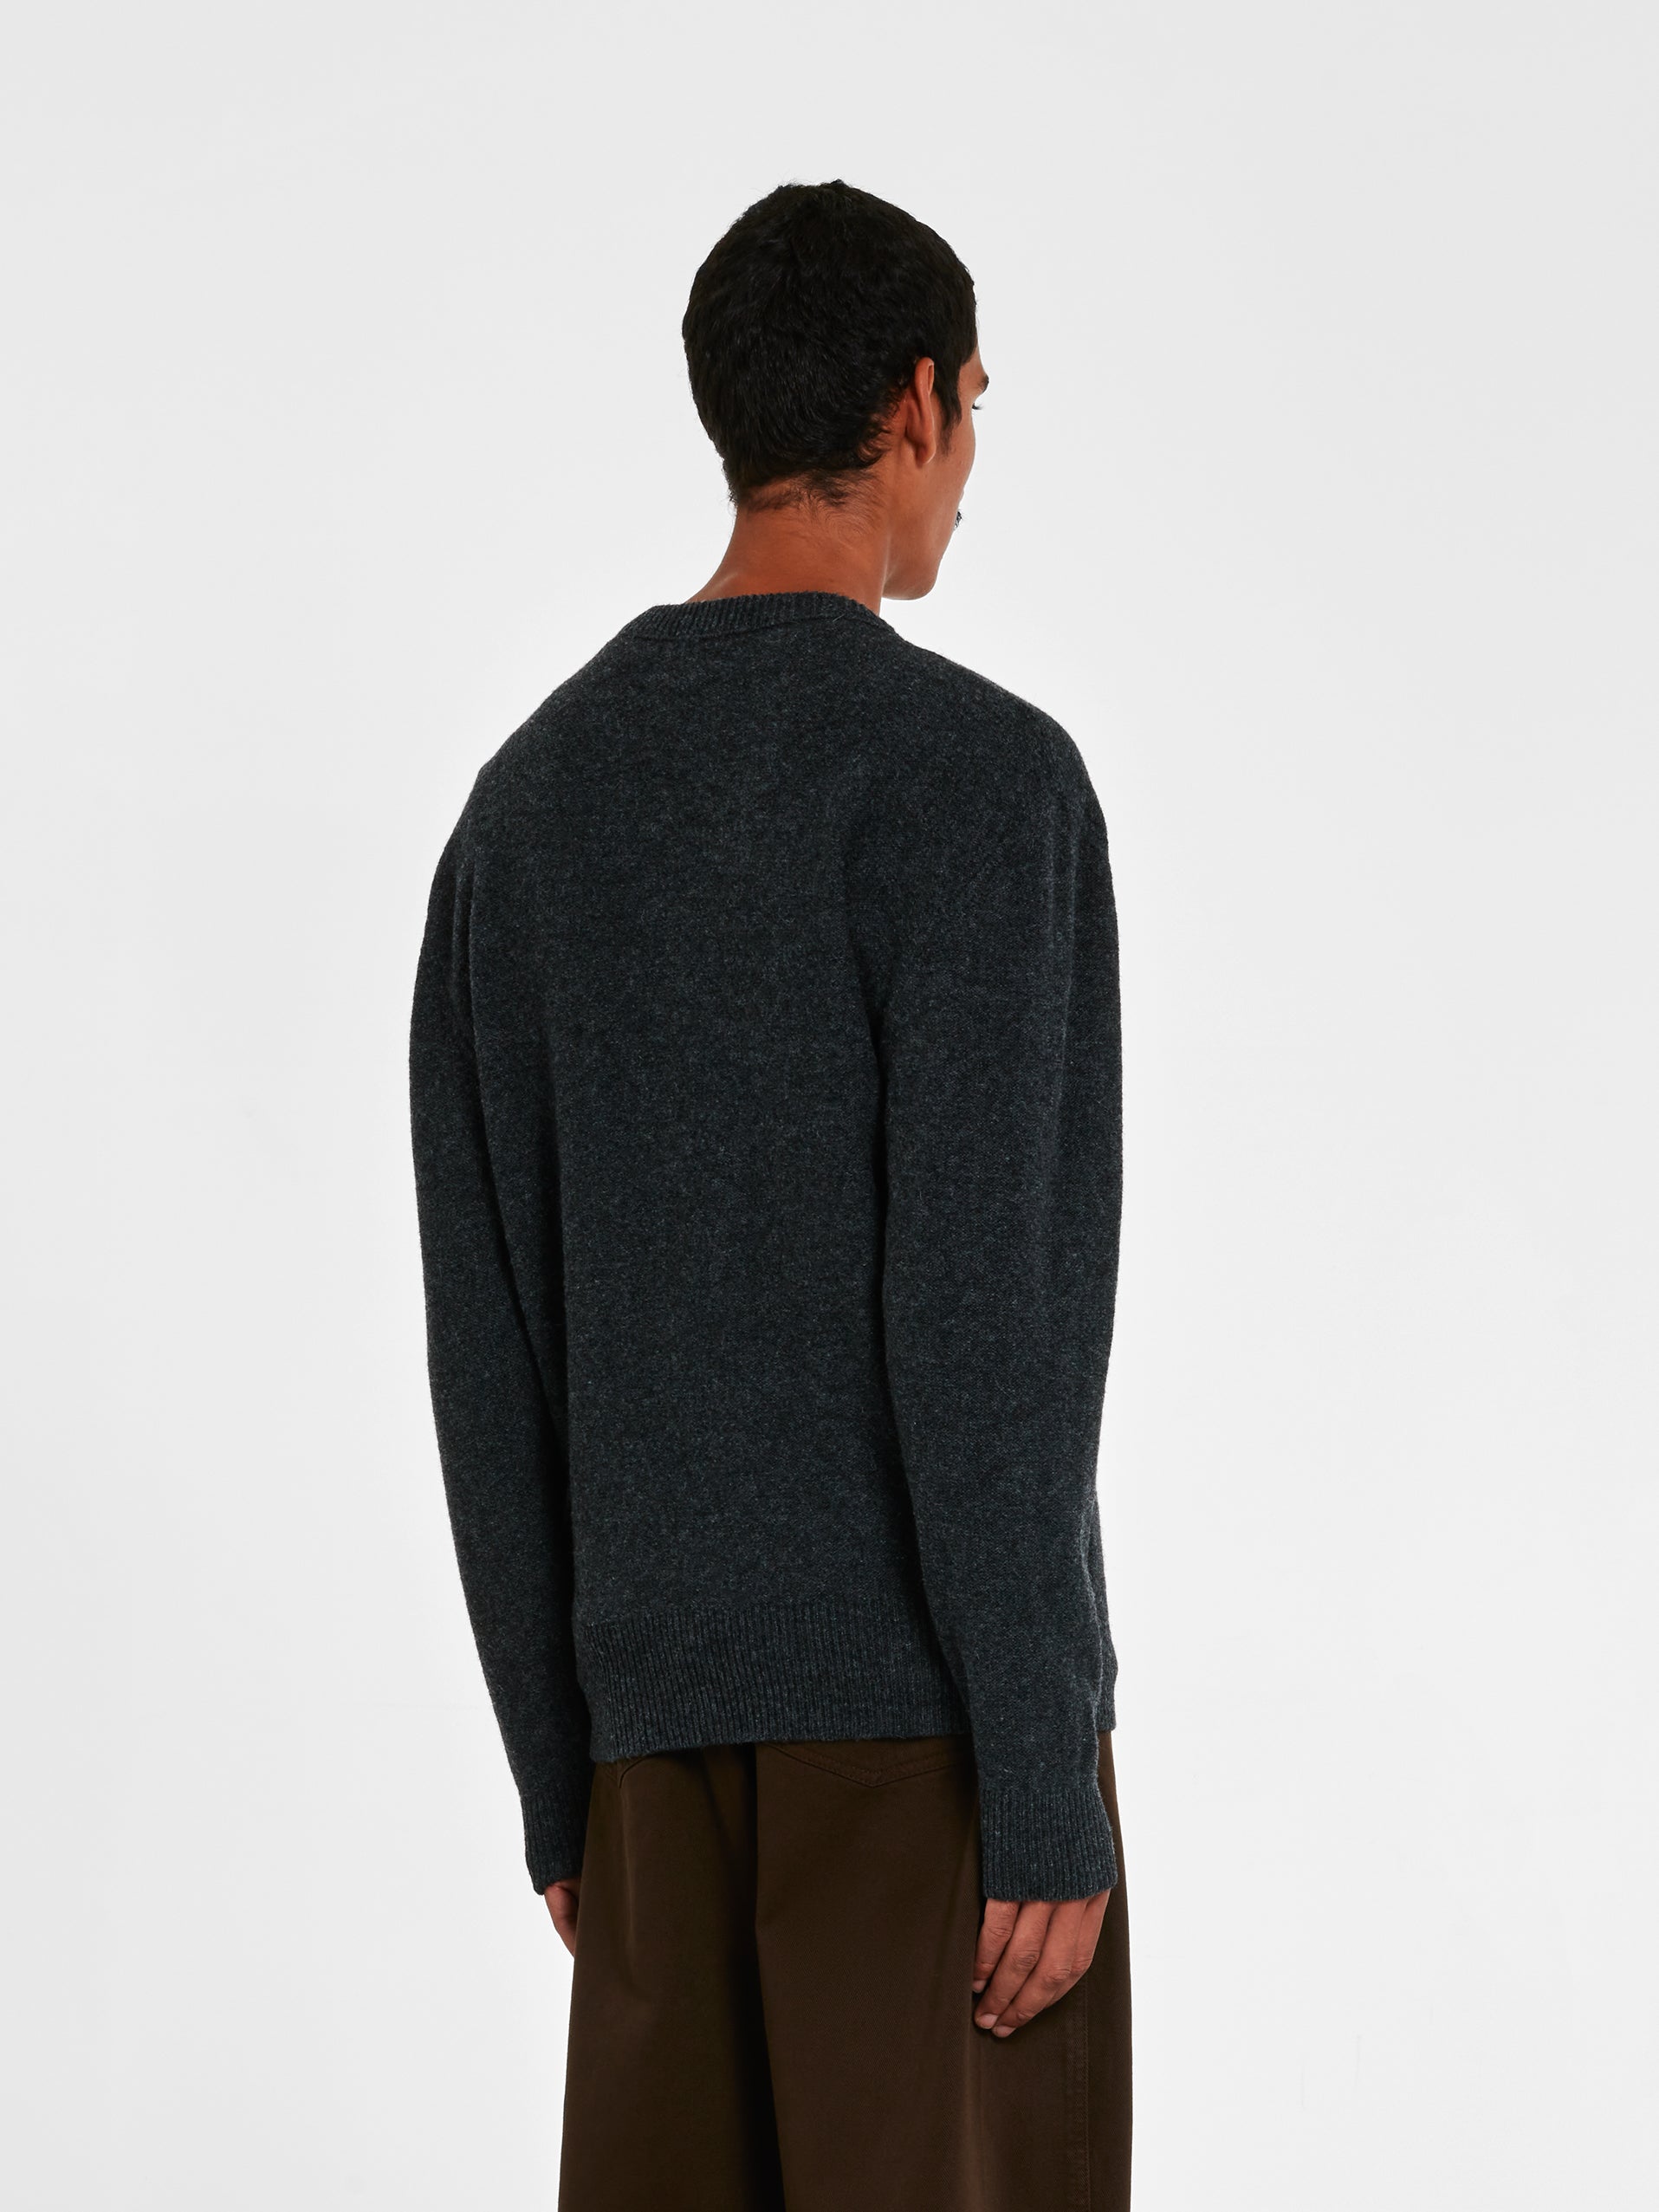 Lemaire - Men’s V-Neck Sweater - (Black) view 3